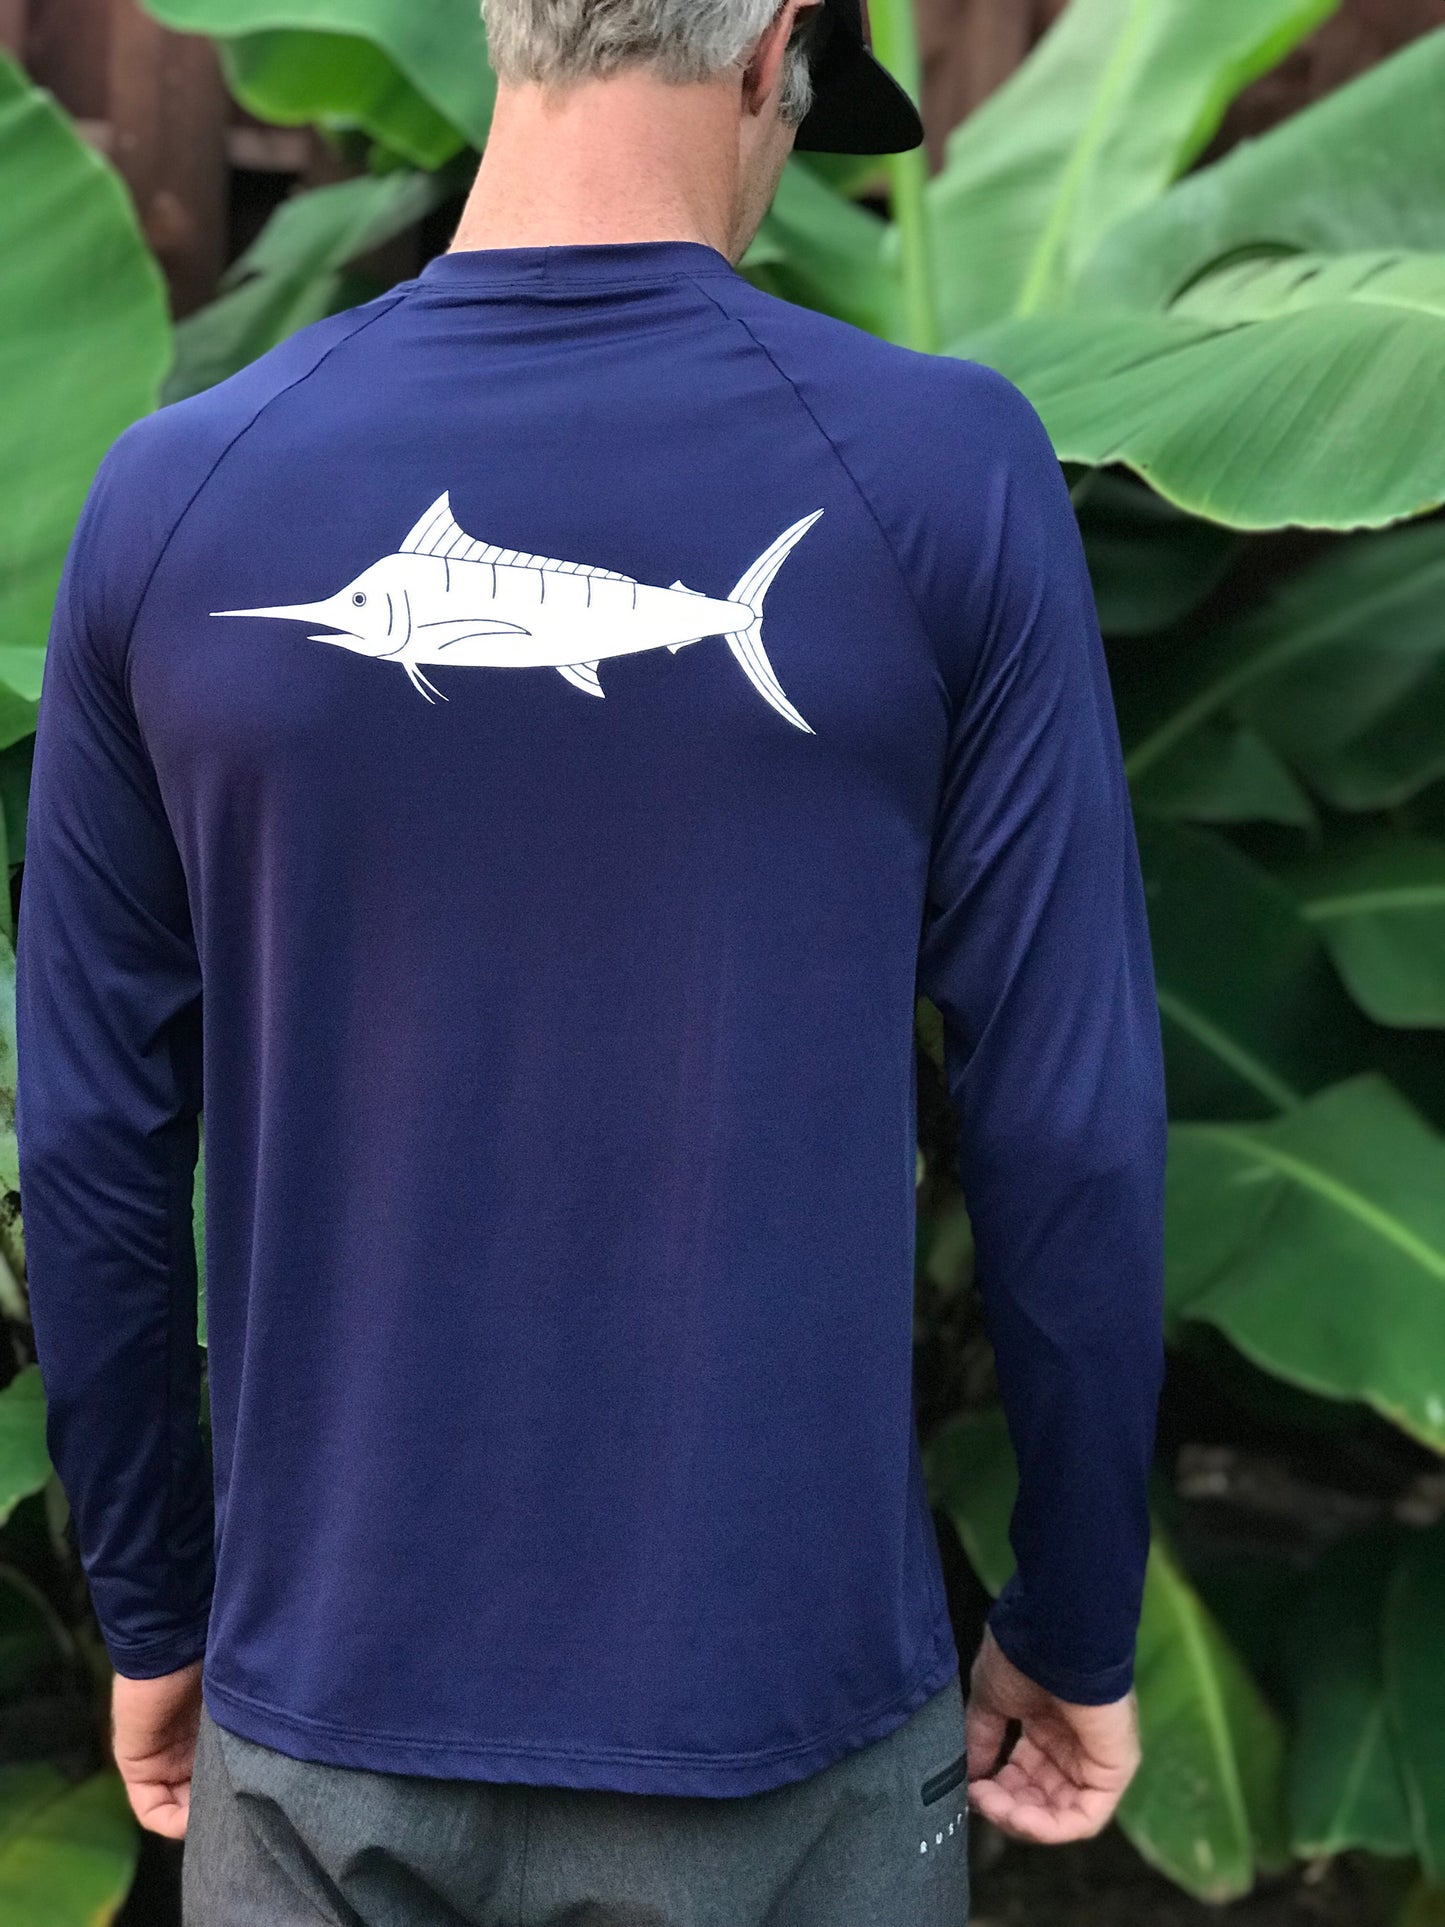 SALE - Men's Loose Fit Longsleeve Marlin 50 SPF Sun Shirt – Sundot Marine